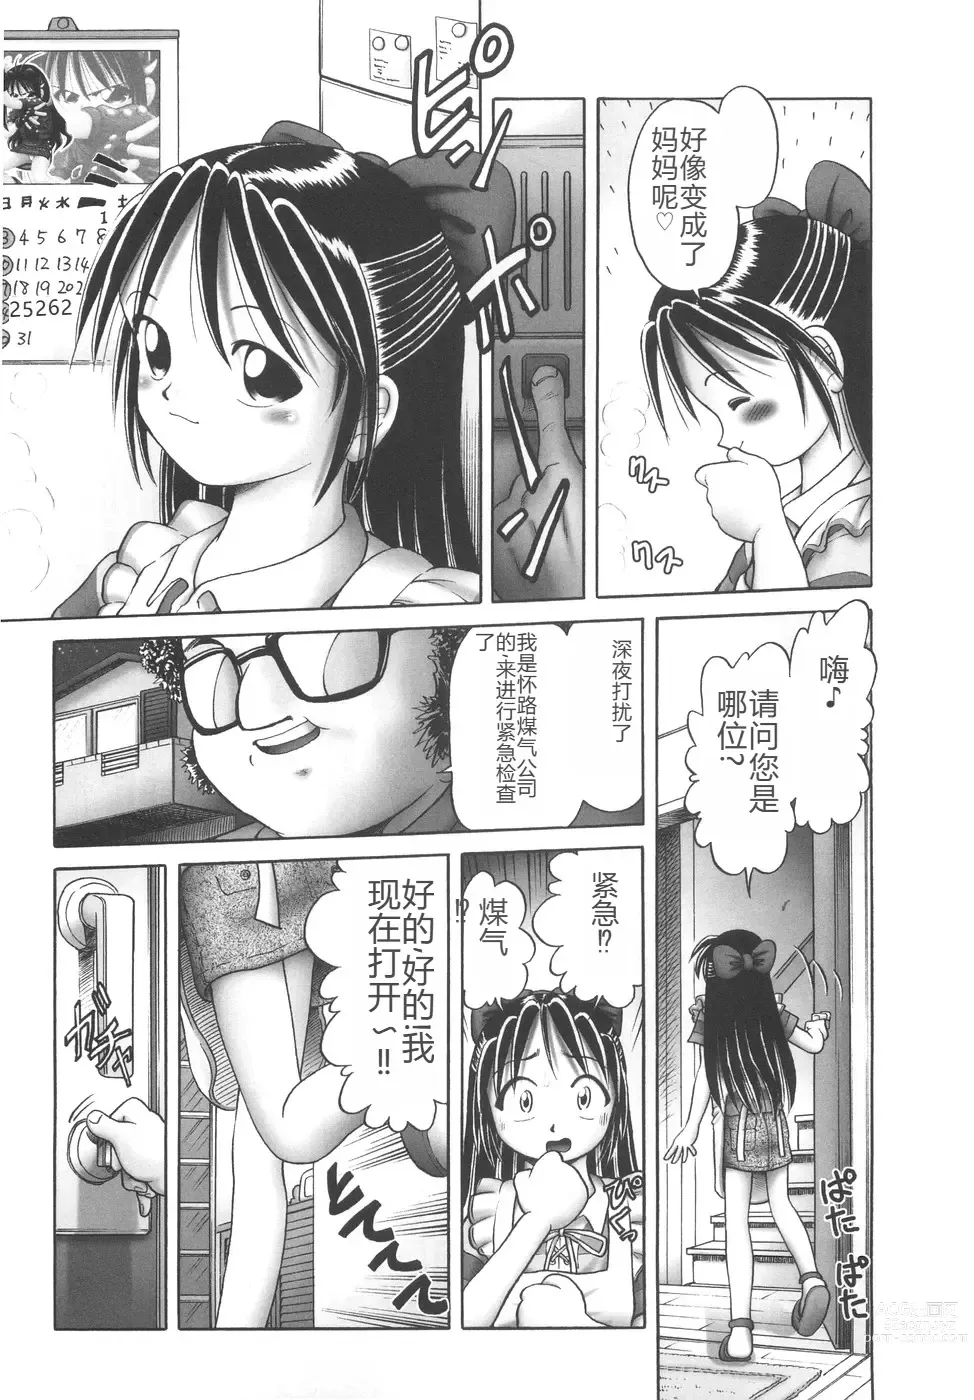 Page 13 of manga Hitoribocchi no Orusuban